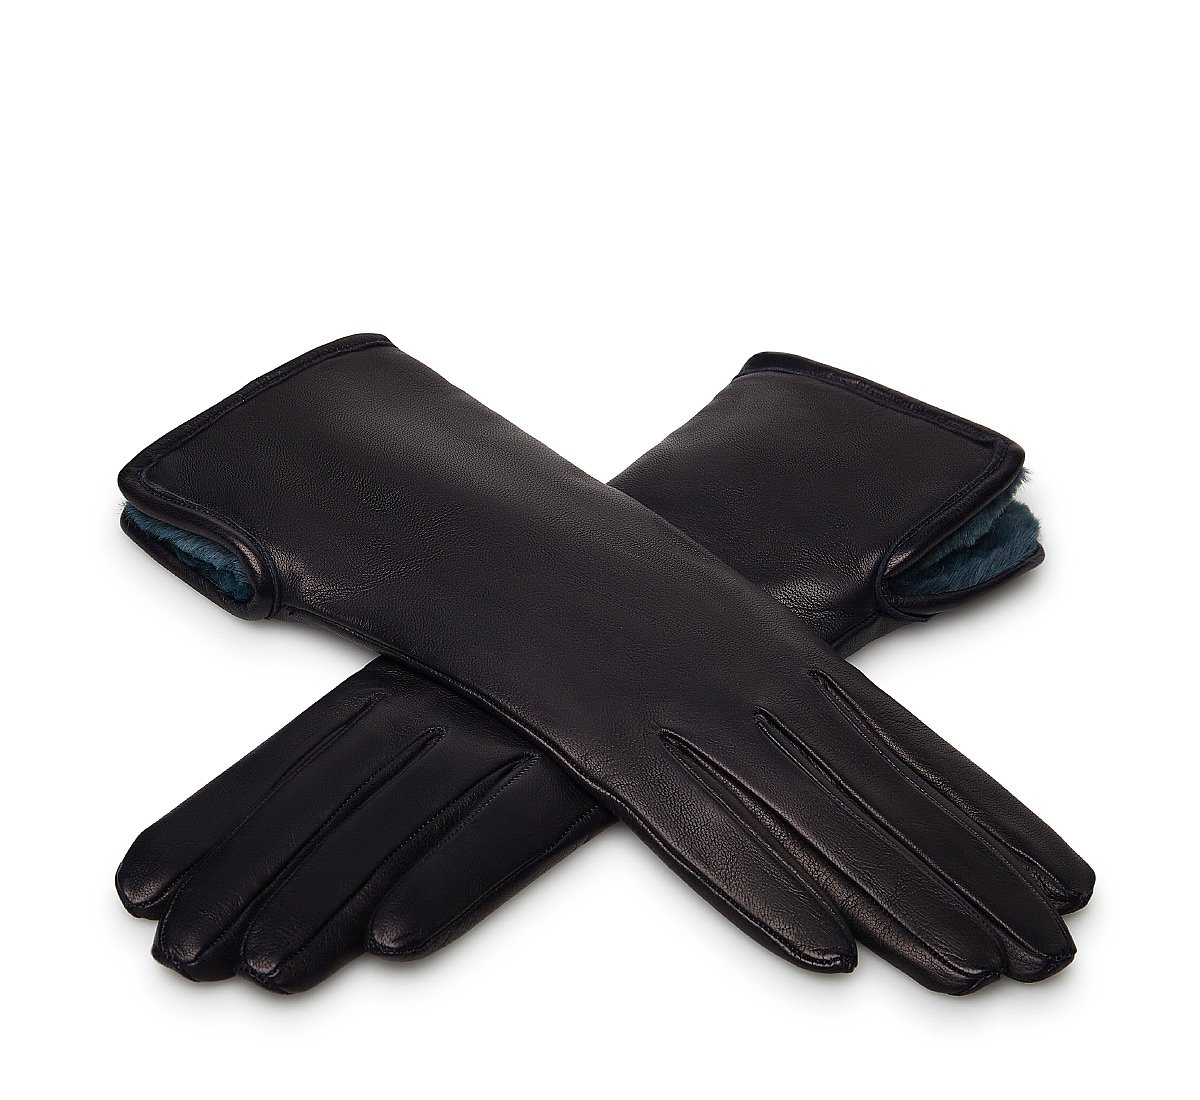 Black gloves with fur